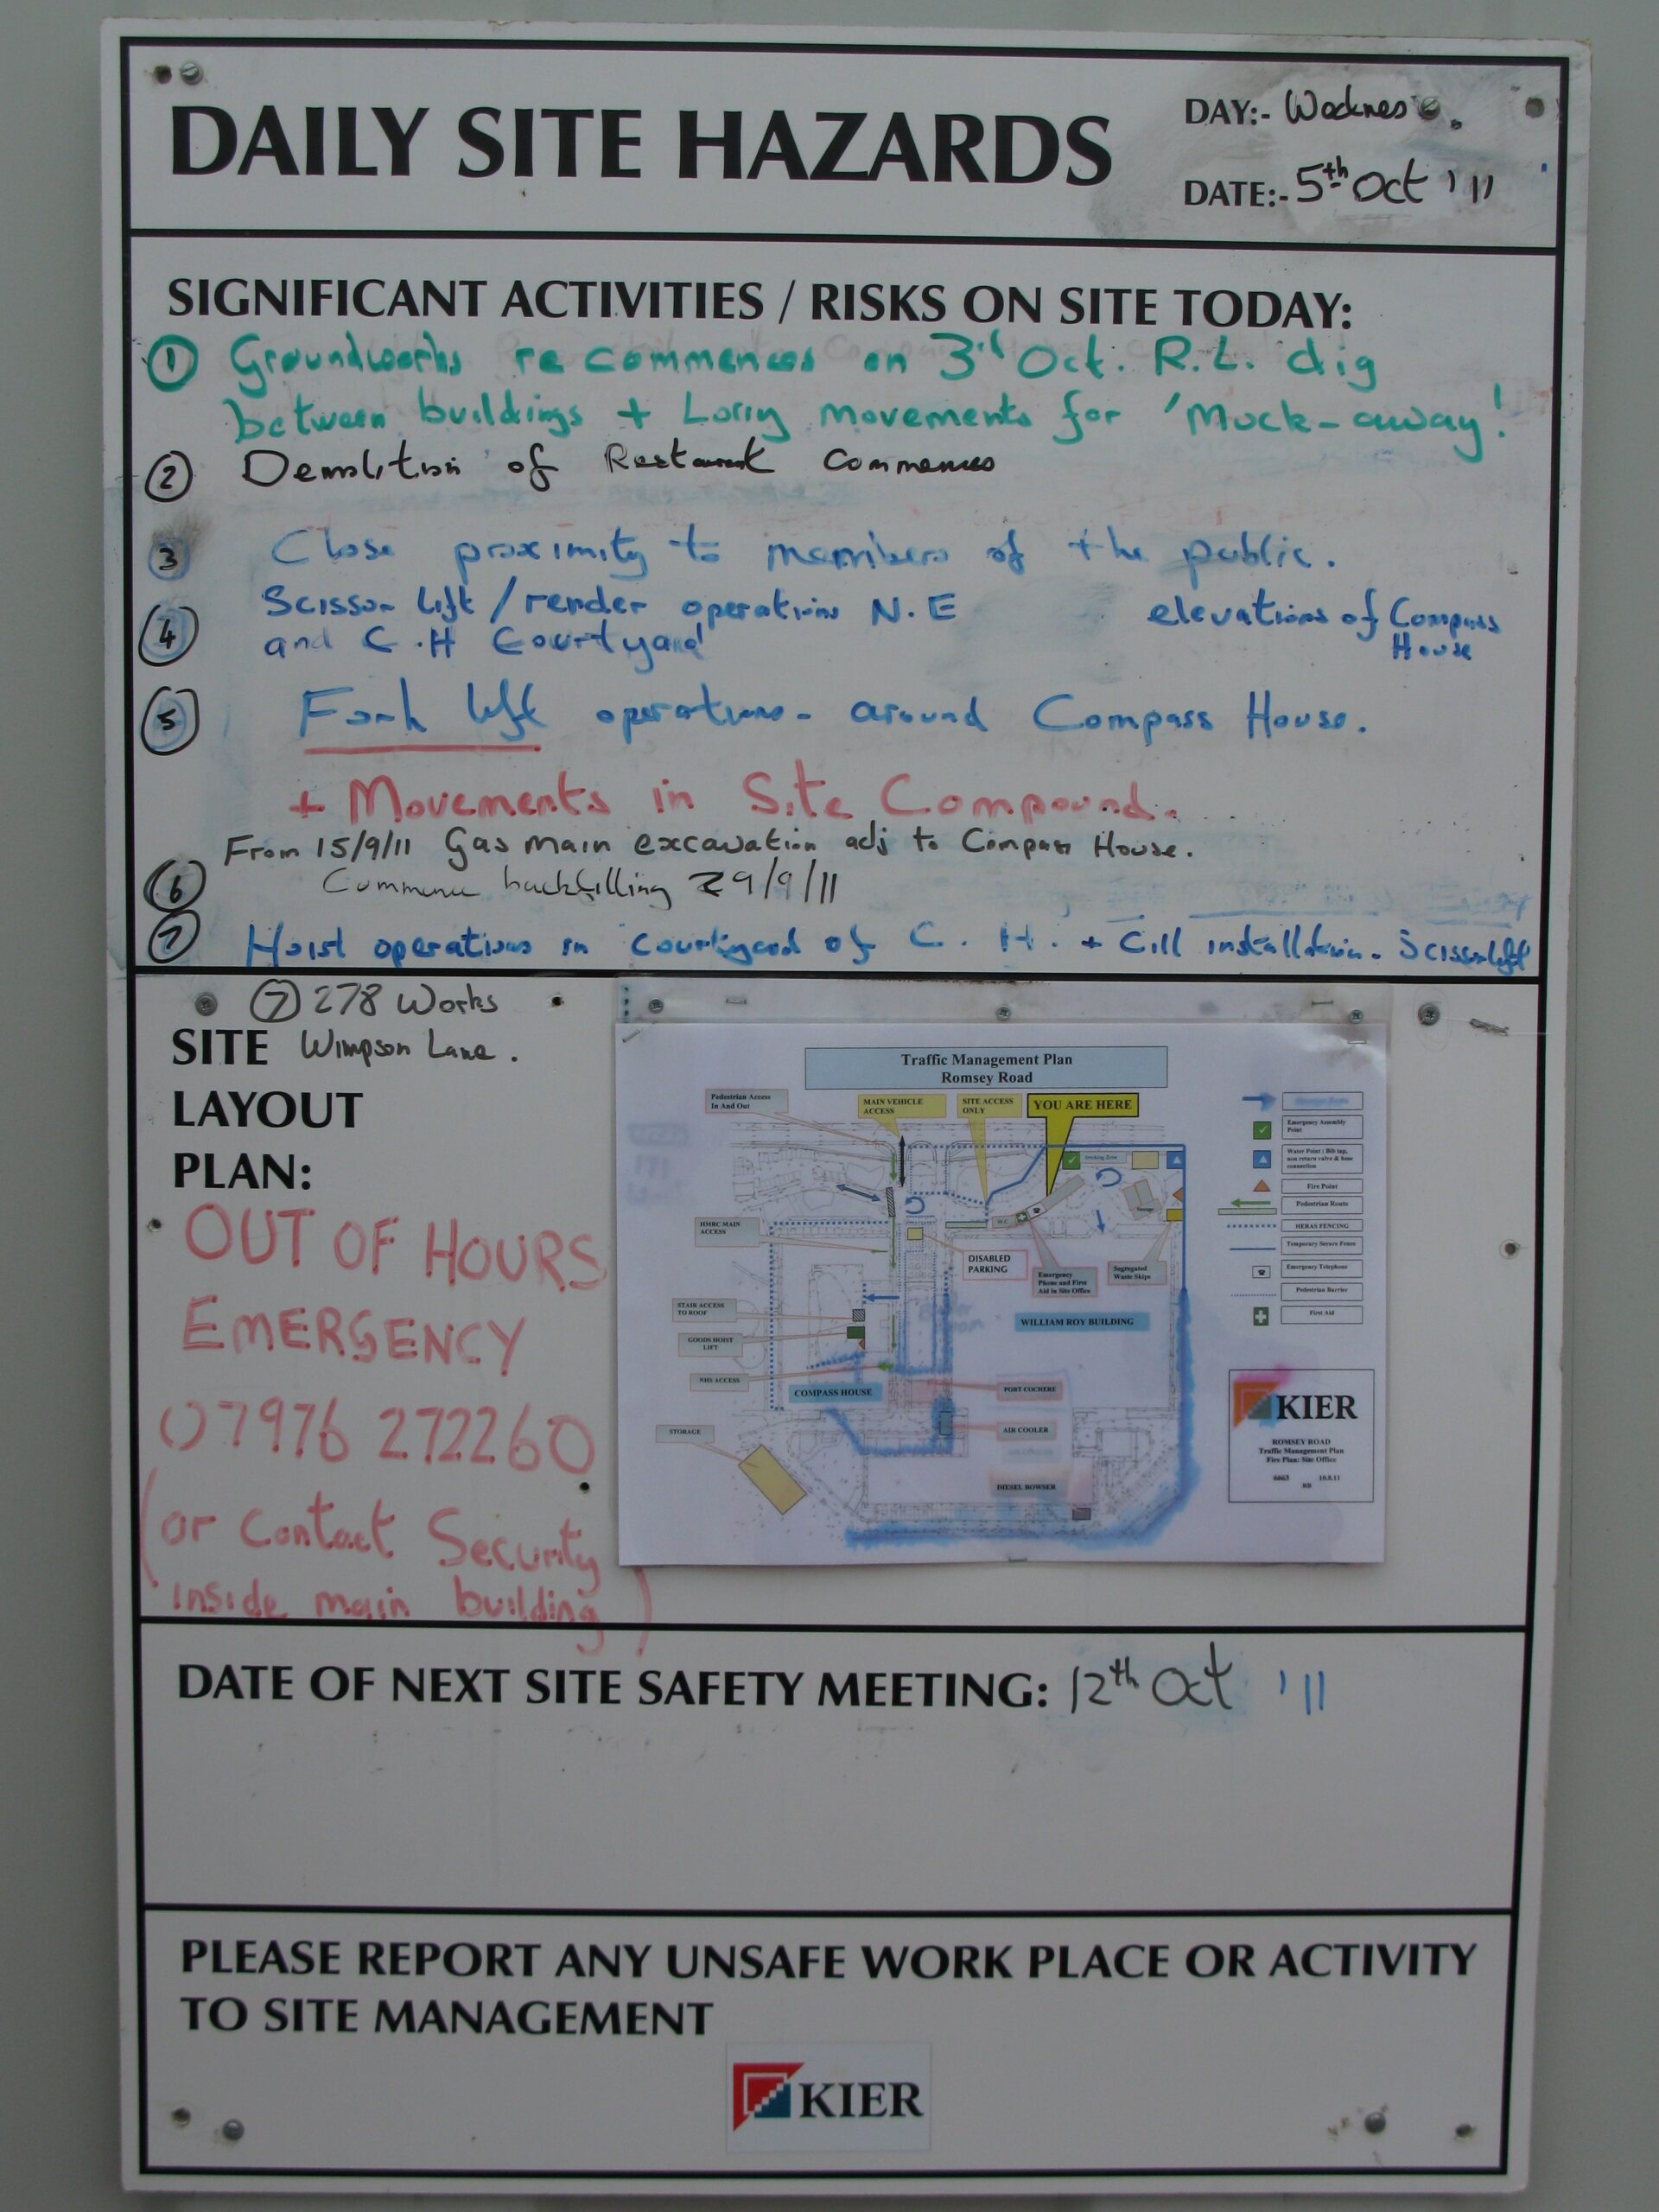 H&S notice board at Maybush on 5 Oct 2011